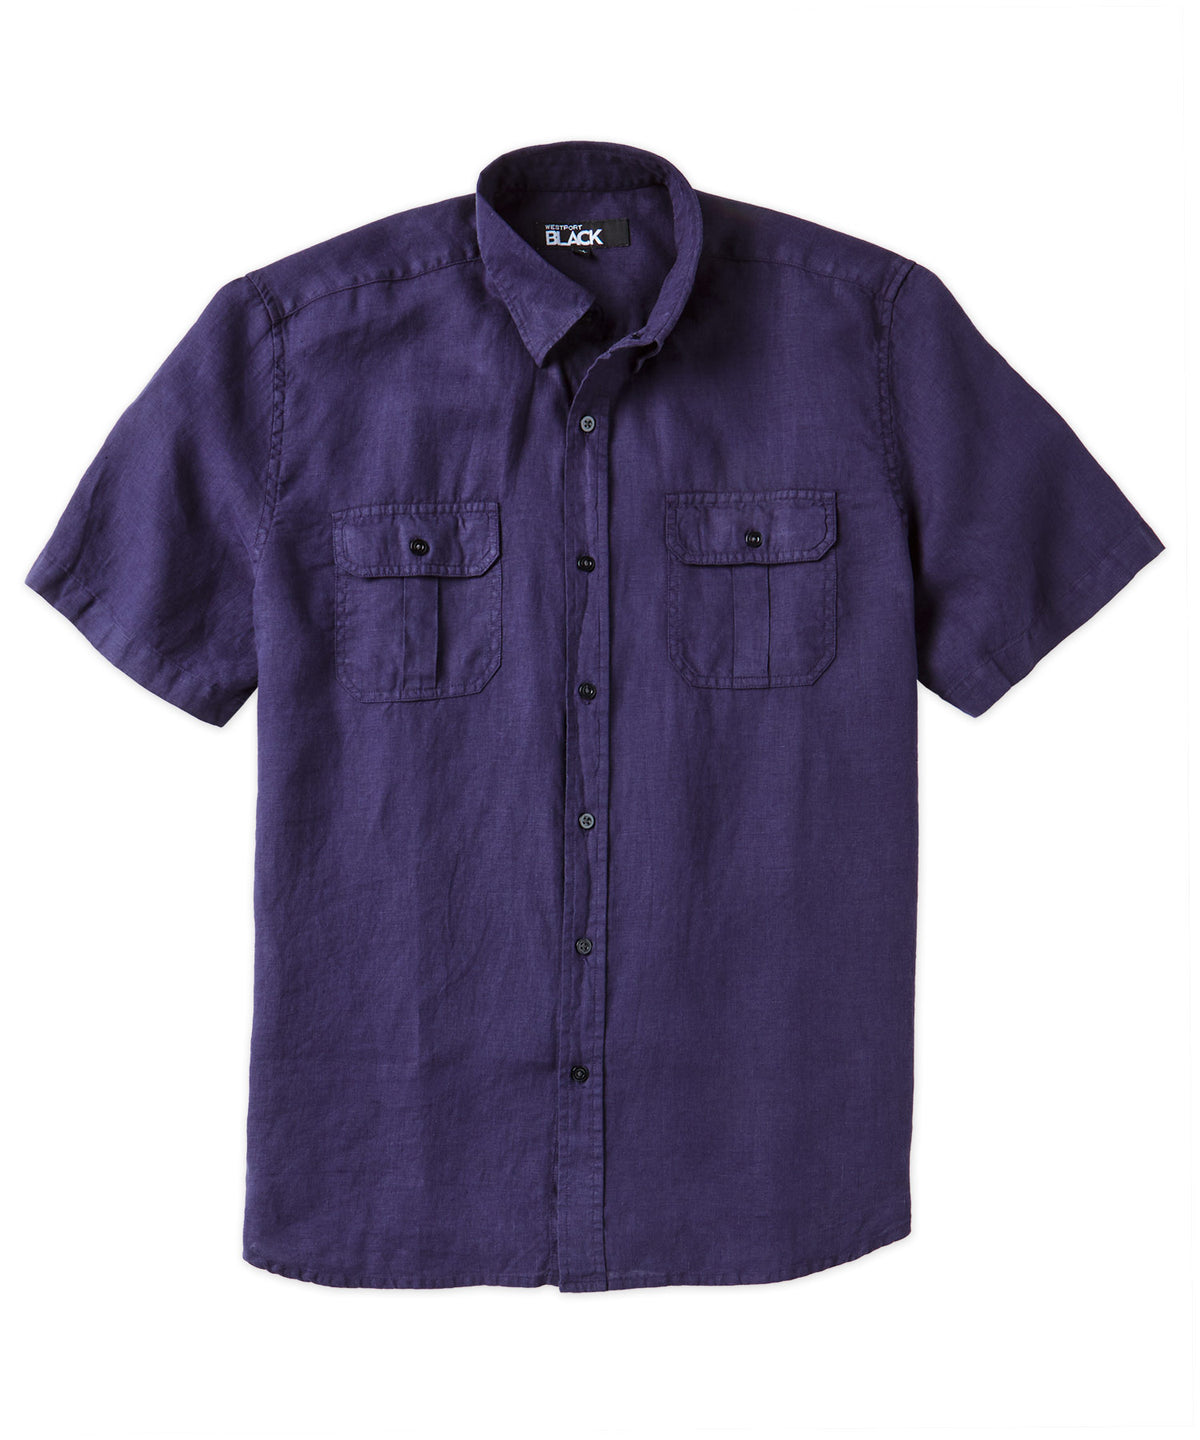 Westport Black Short Sleeve Linen Safari Shirt